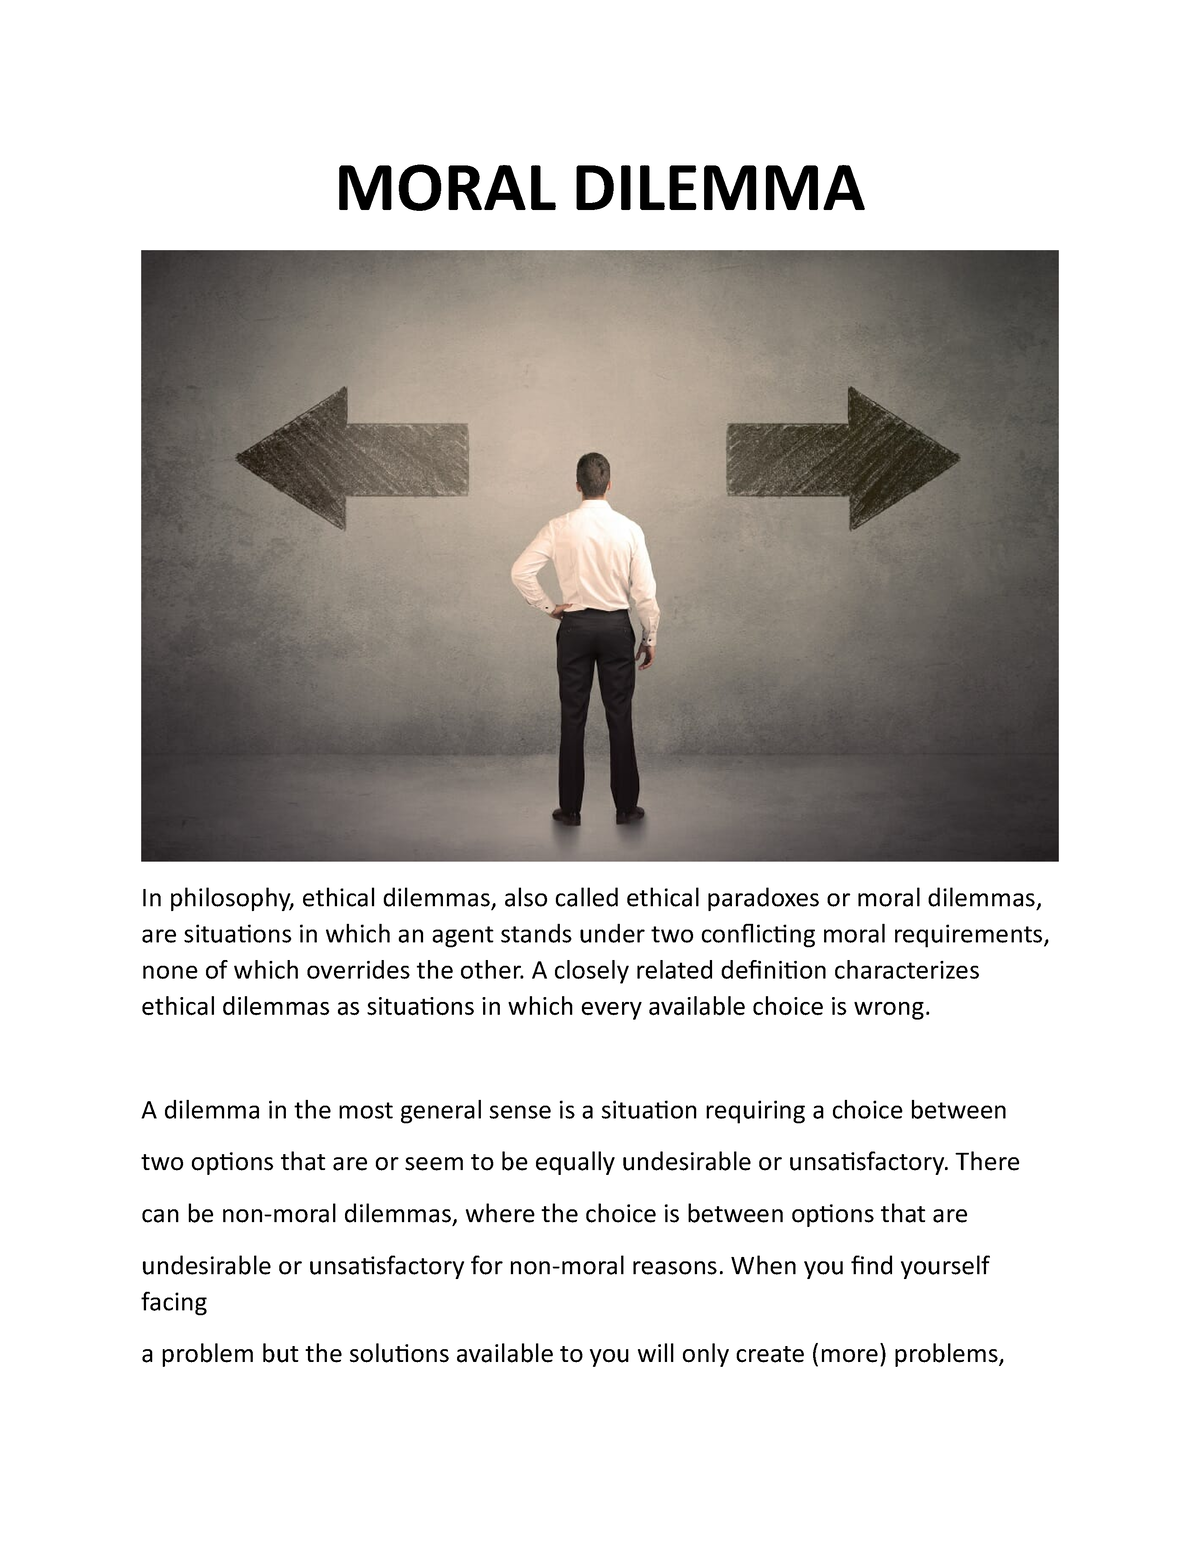 moral dilemma topics for essays